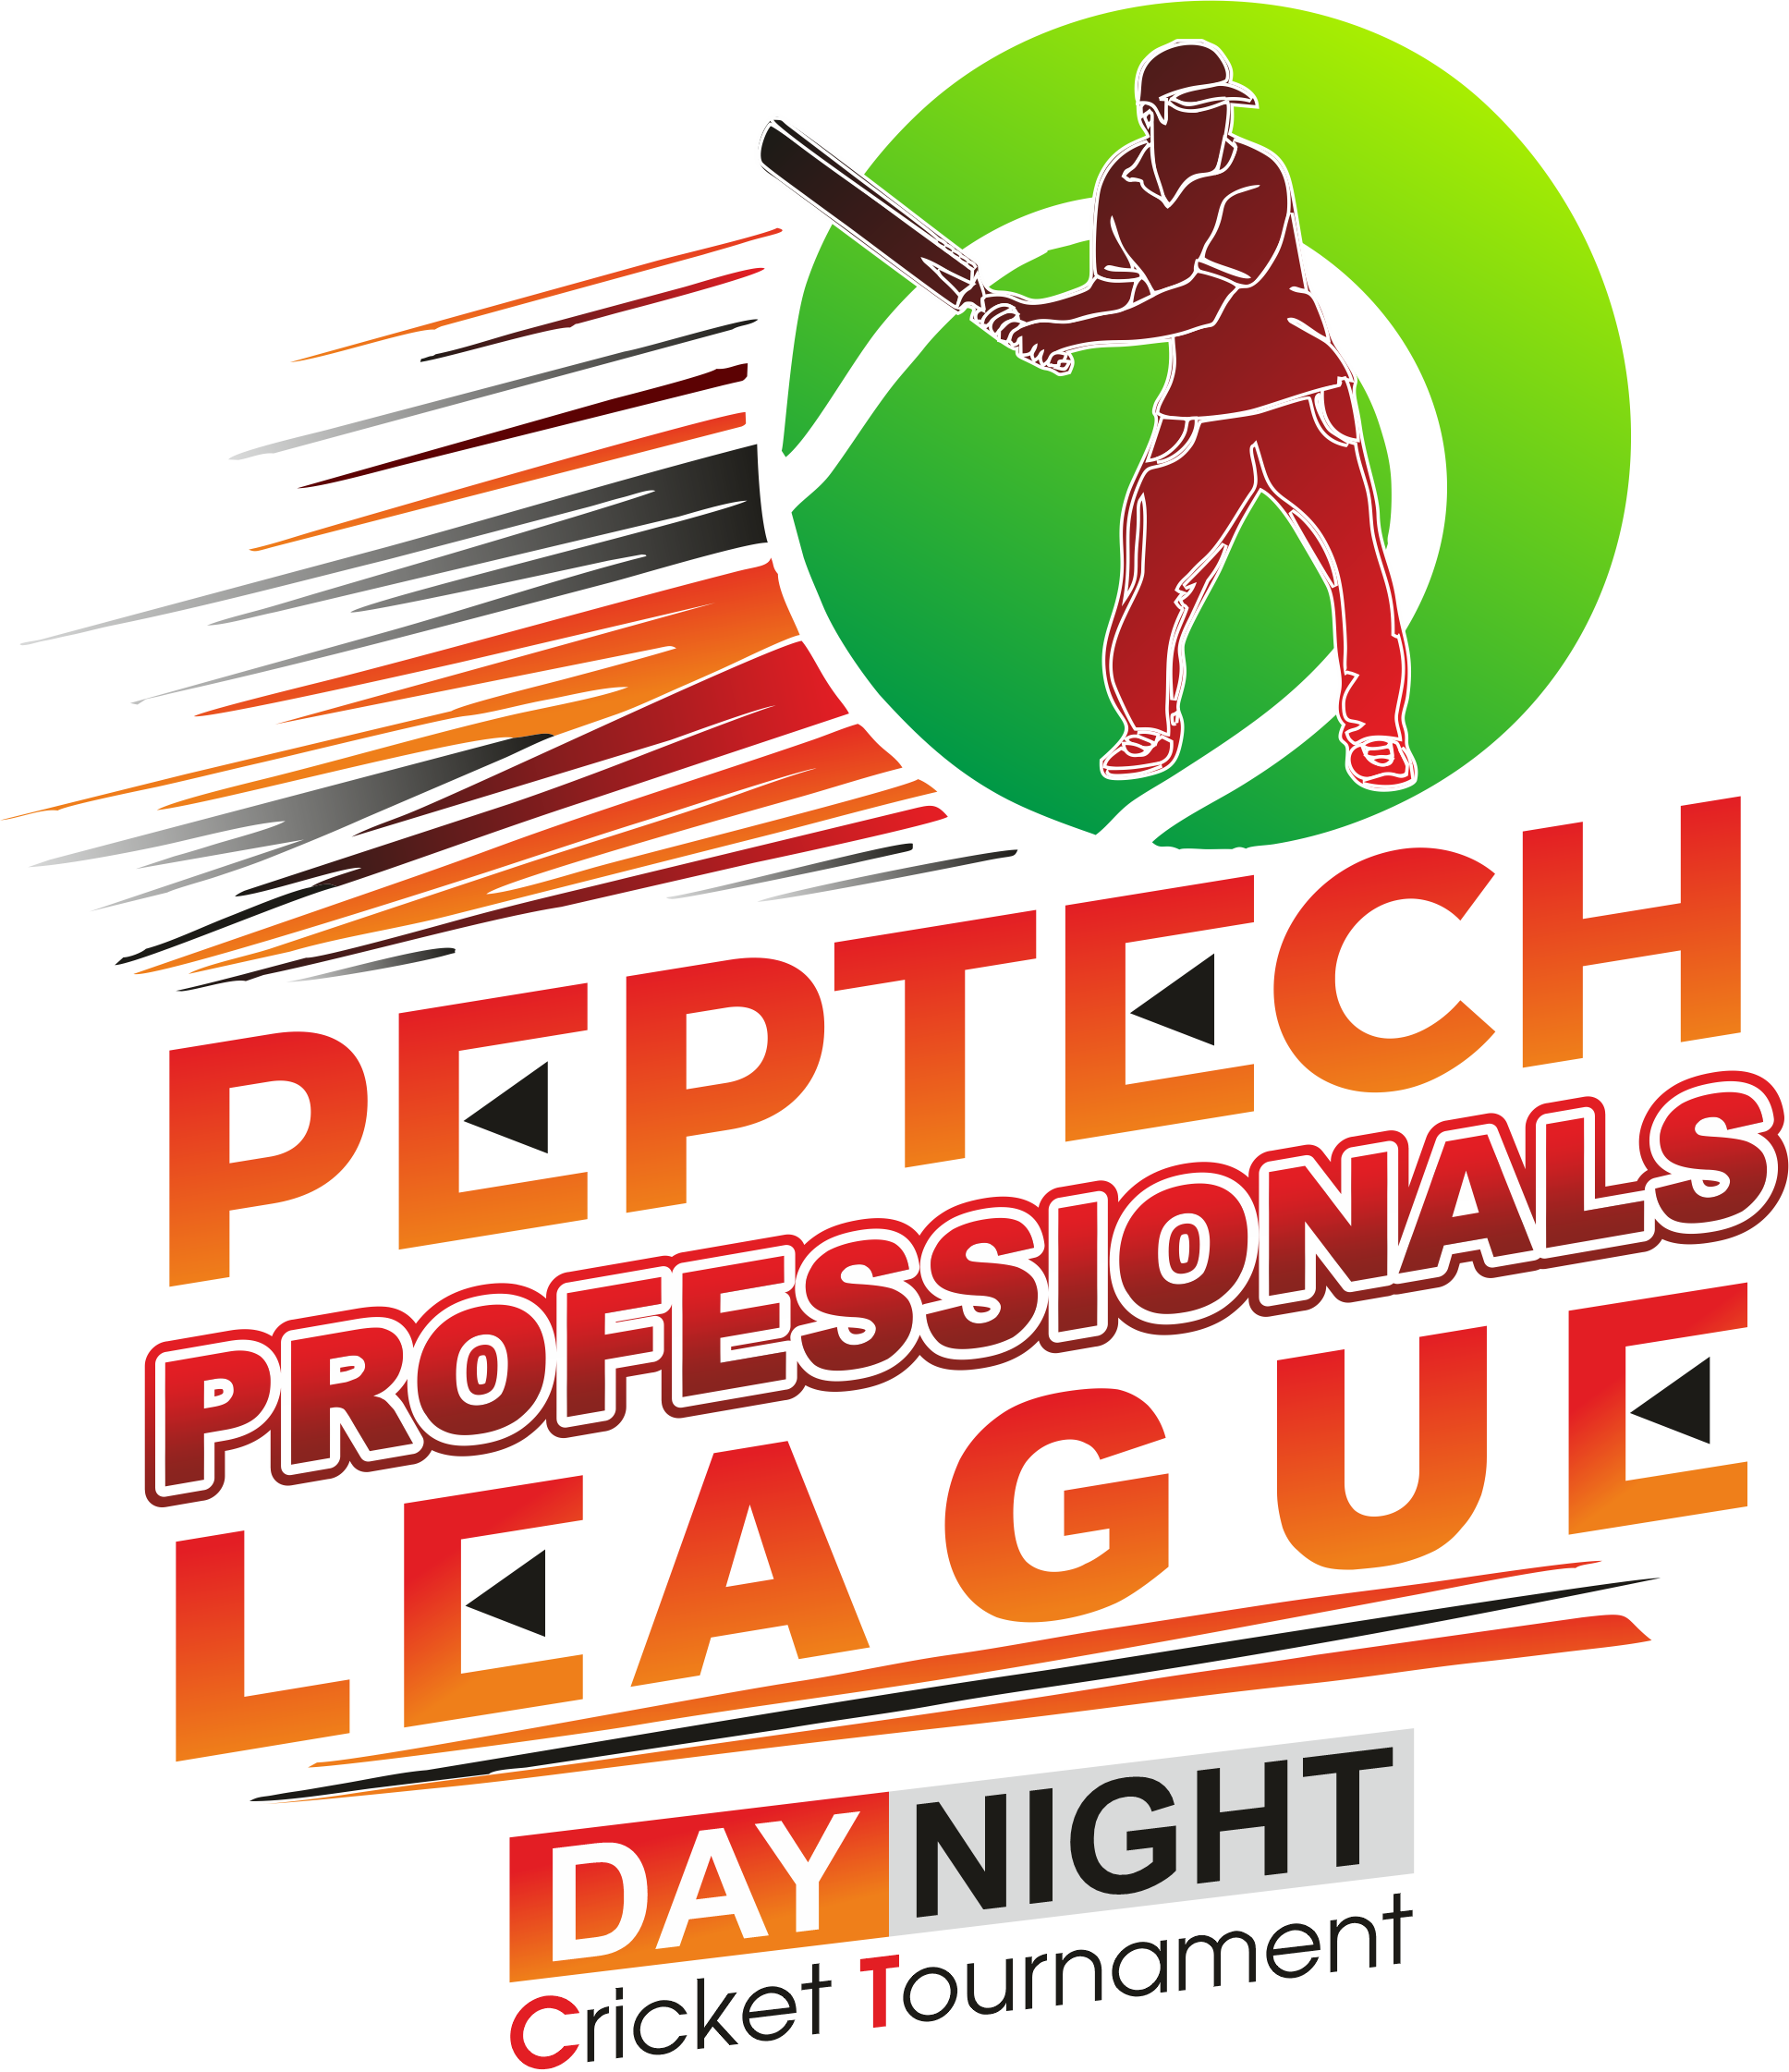 PEPTECH PROFESSIONALS LEAGUE DAY-NIGHT CRICKET TOURNAMENT